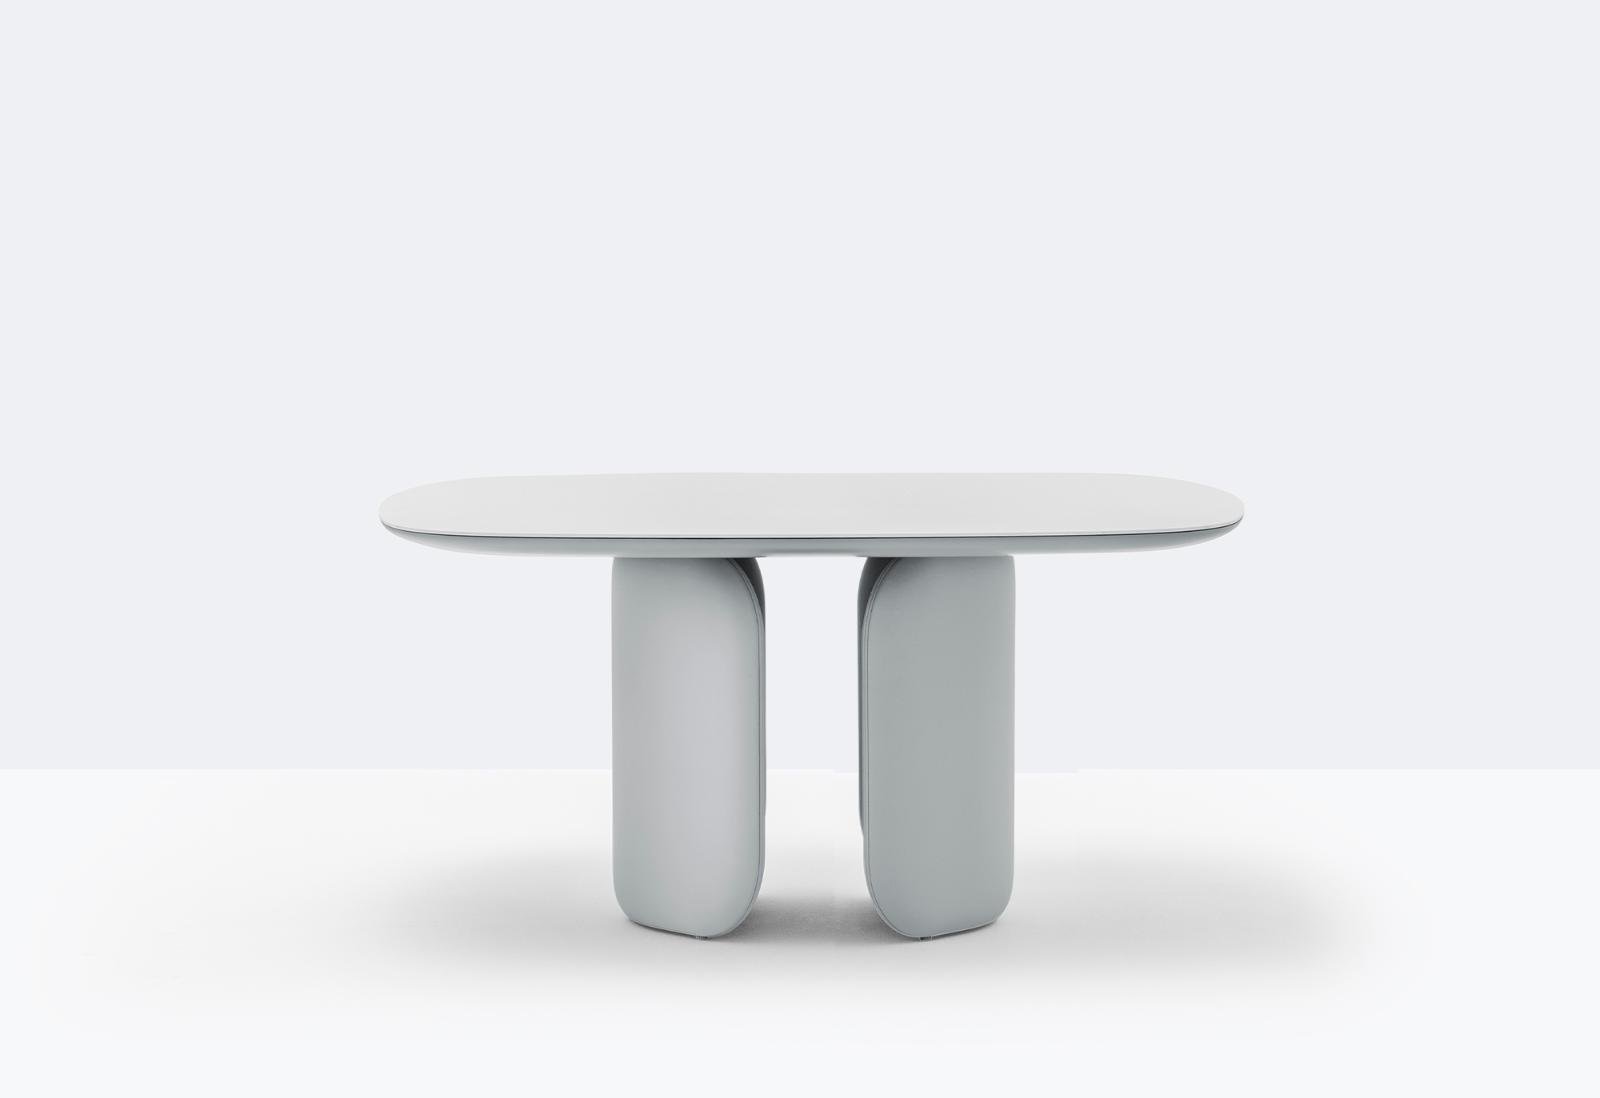 Elinor Table desk from Pedrali, designed by Claudio Bellini